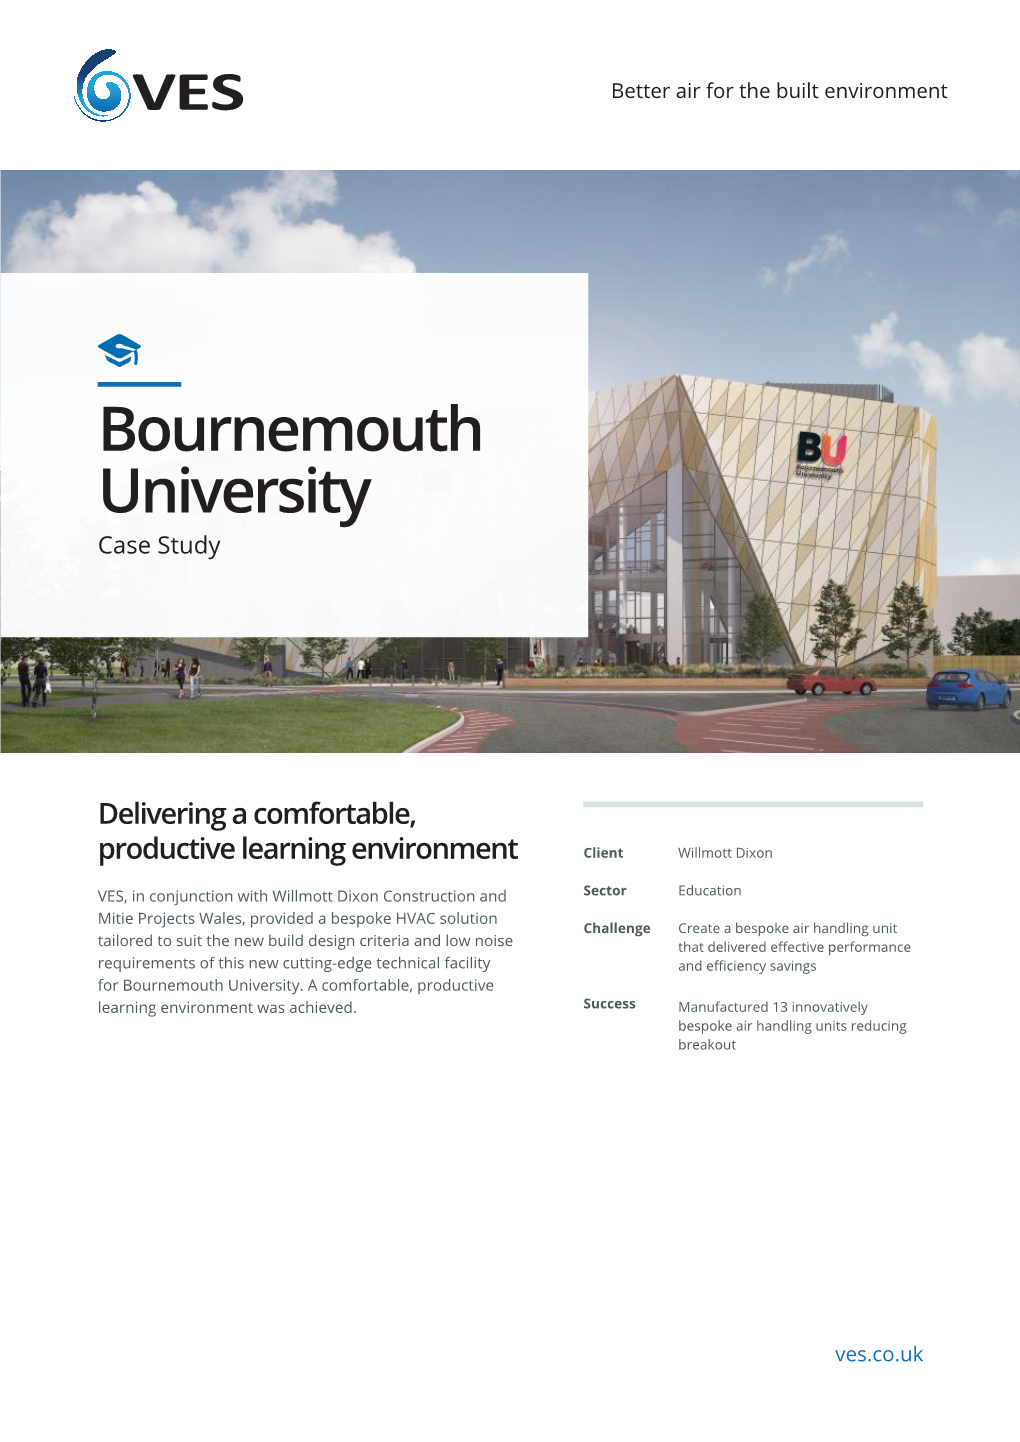 Bournemouth University Case Study